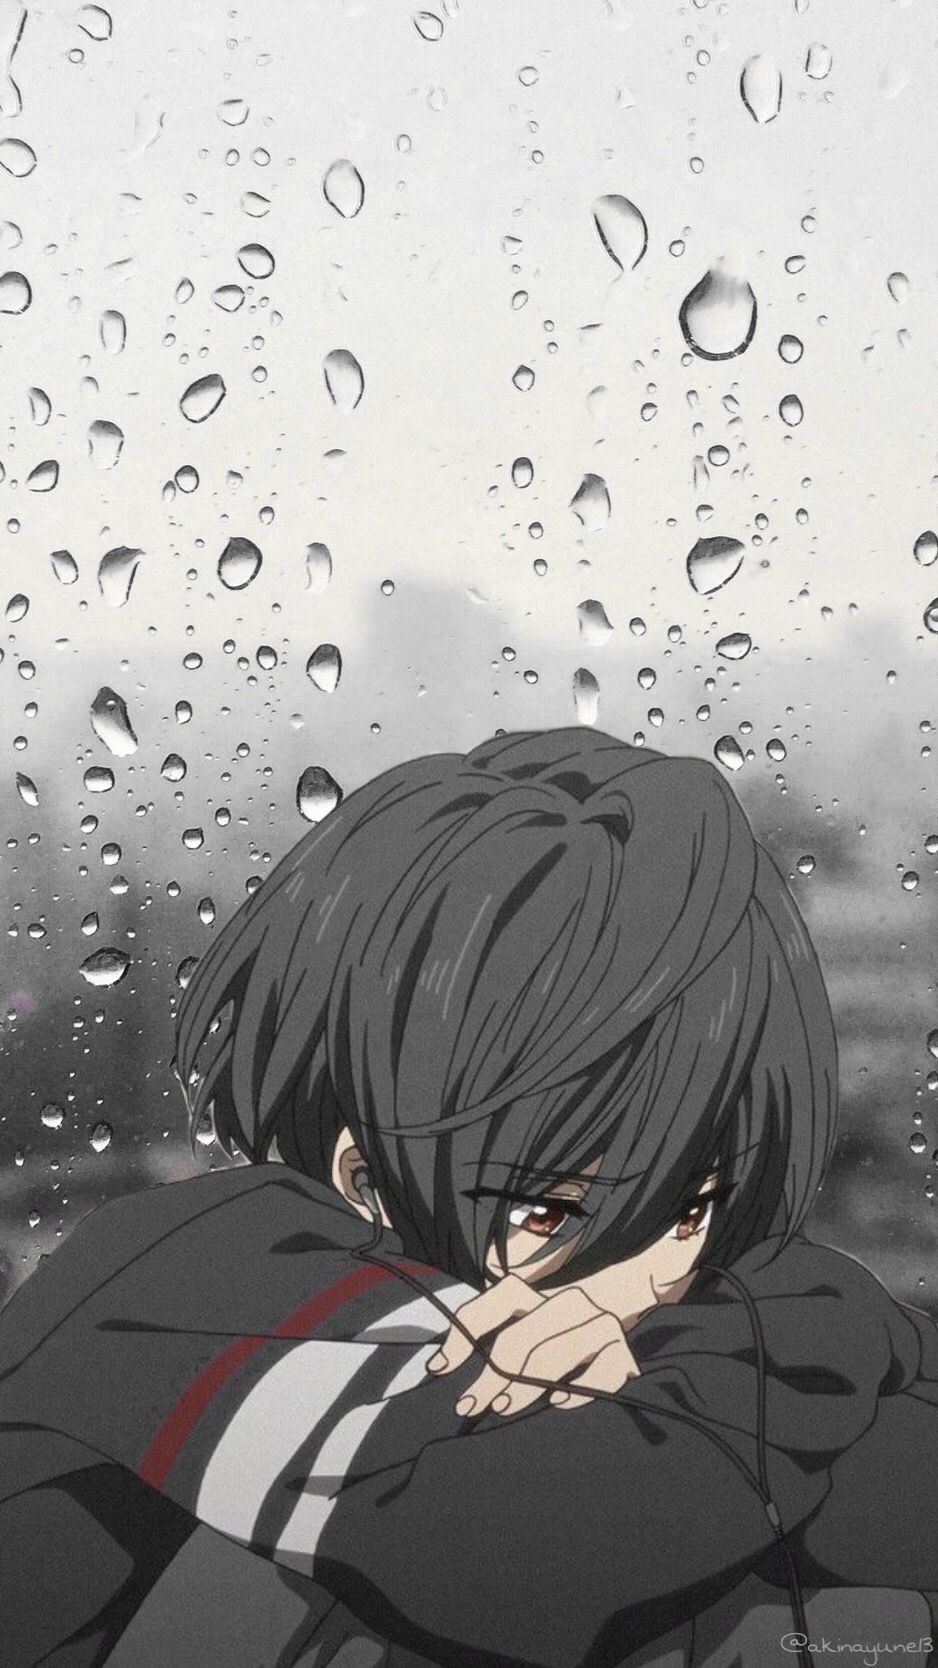 Sad Anime Iphone Wallpapers